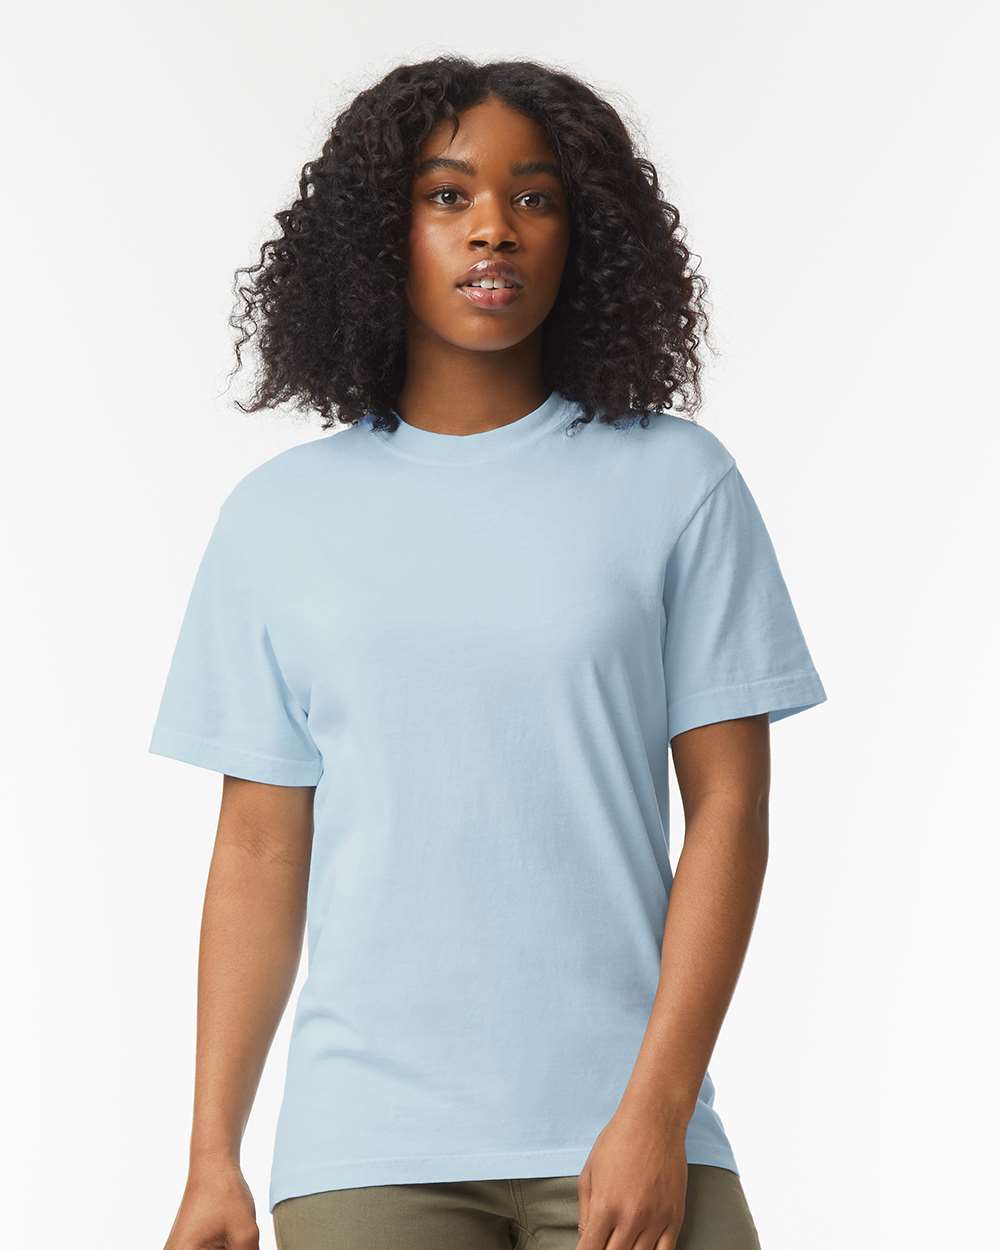 Comfort Colors Heavyweight T-Shirt Size Medium